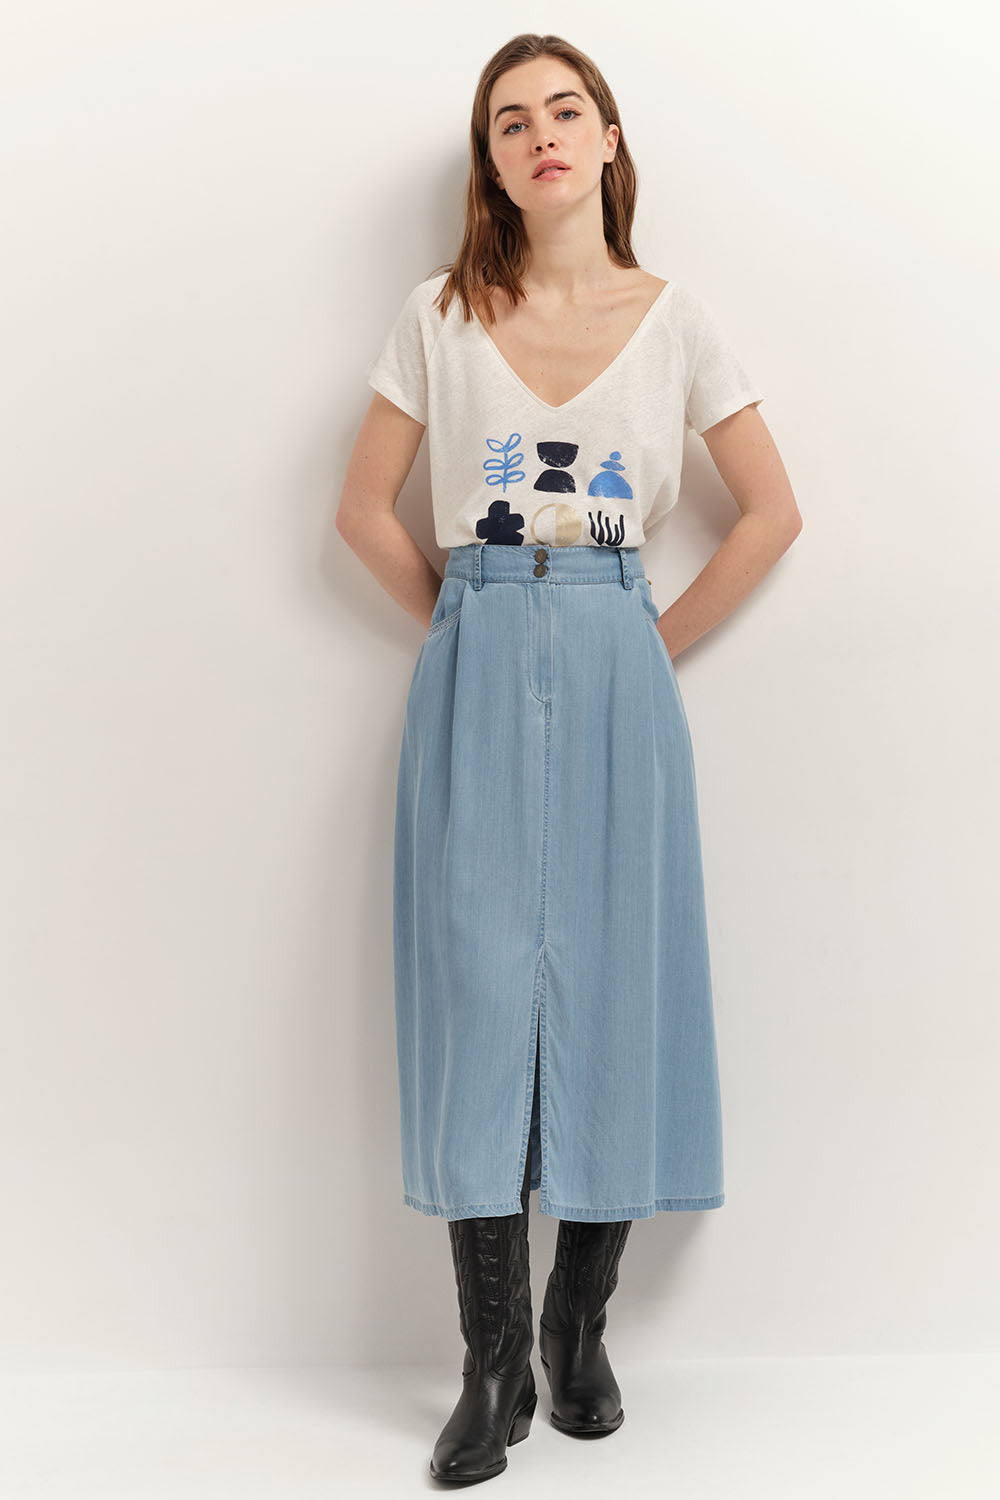 MILAN - T-shirt écru coton lin sérigraphie arty minimale